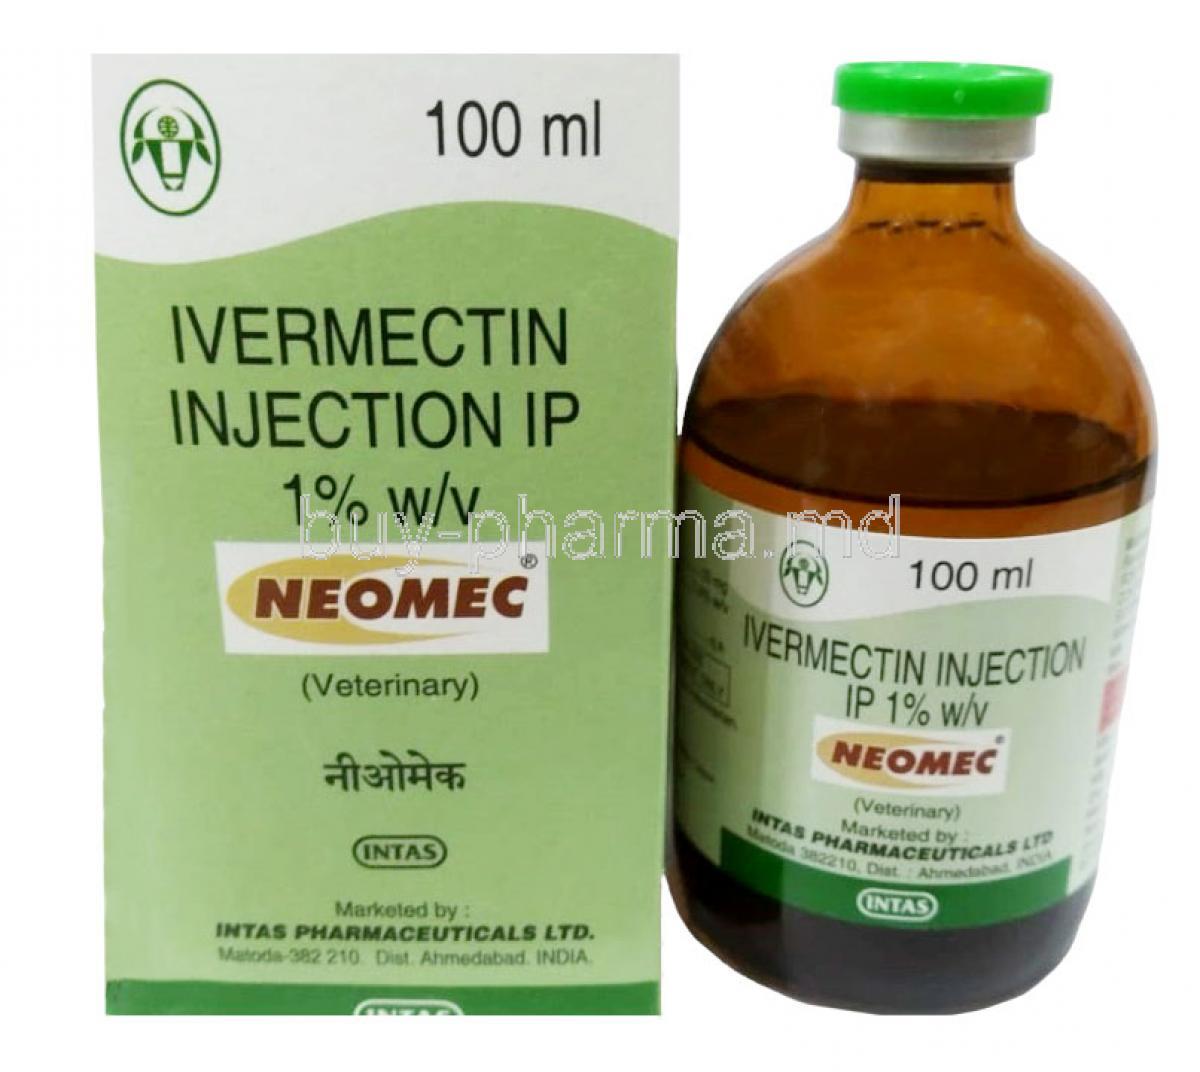 Neomec Injection, Ivermectin 1%, Injection Vial 100mL, Intas Pharmaceuticals Ltd, Box, Vial